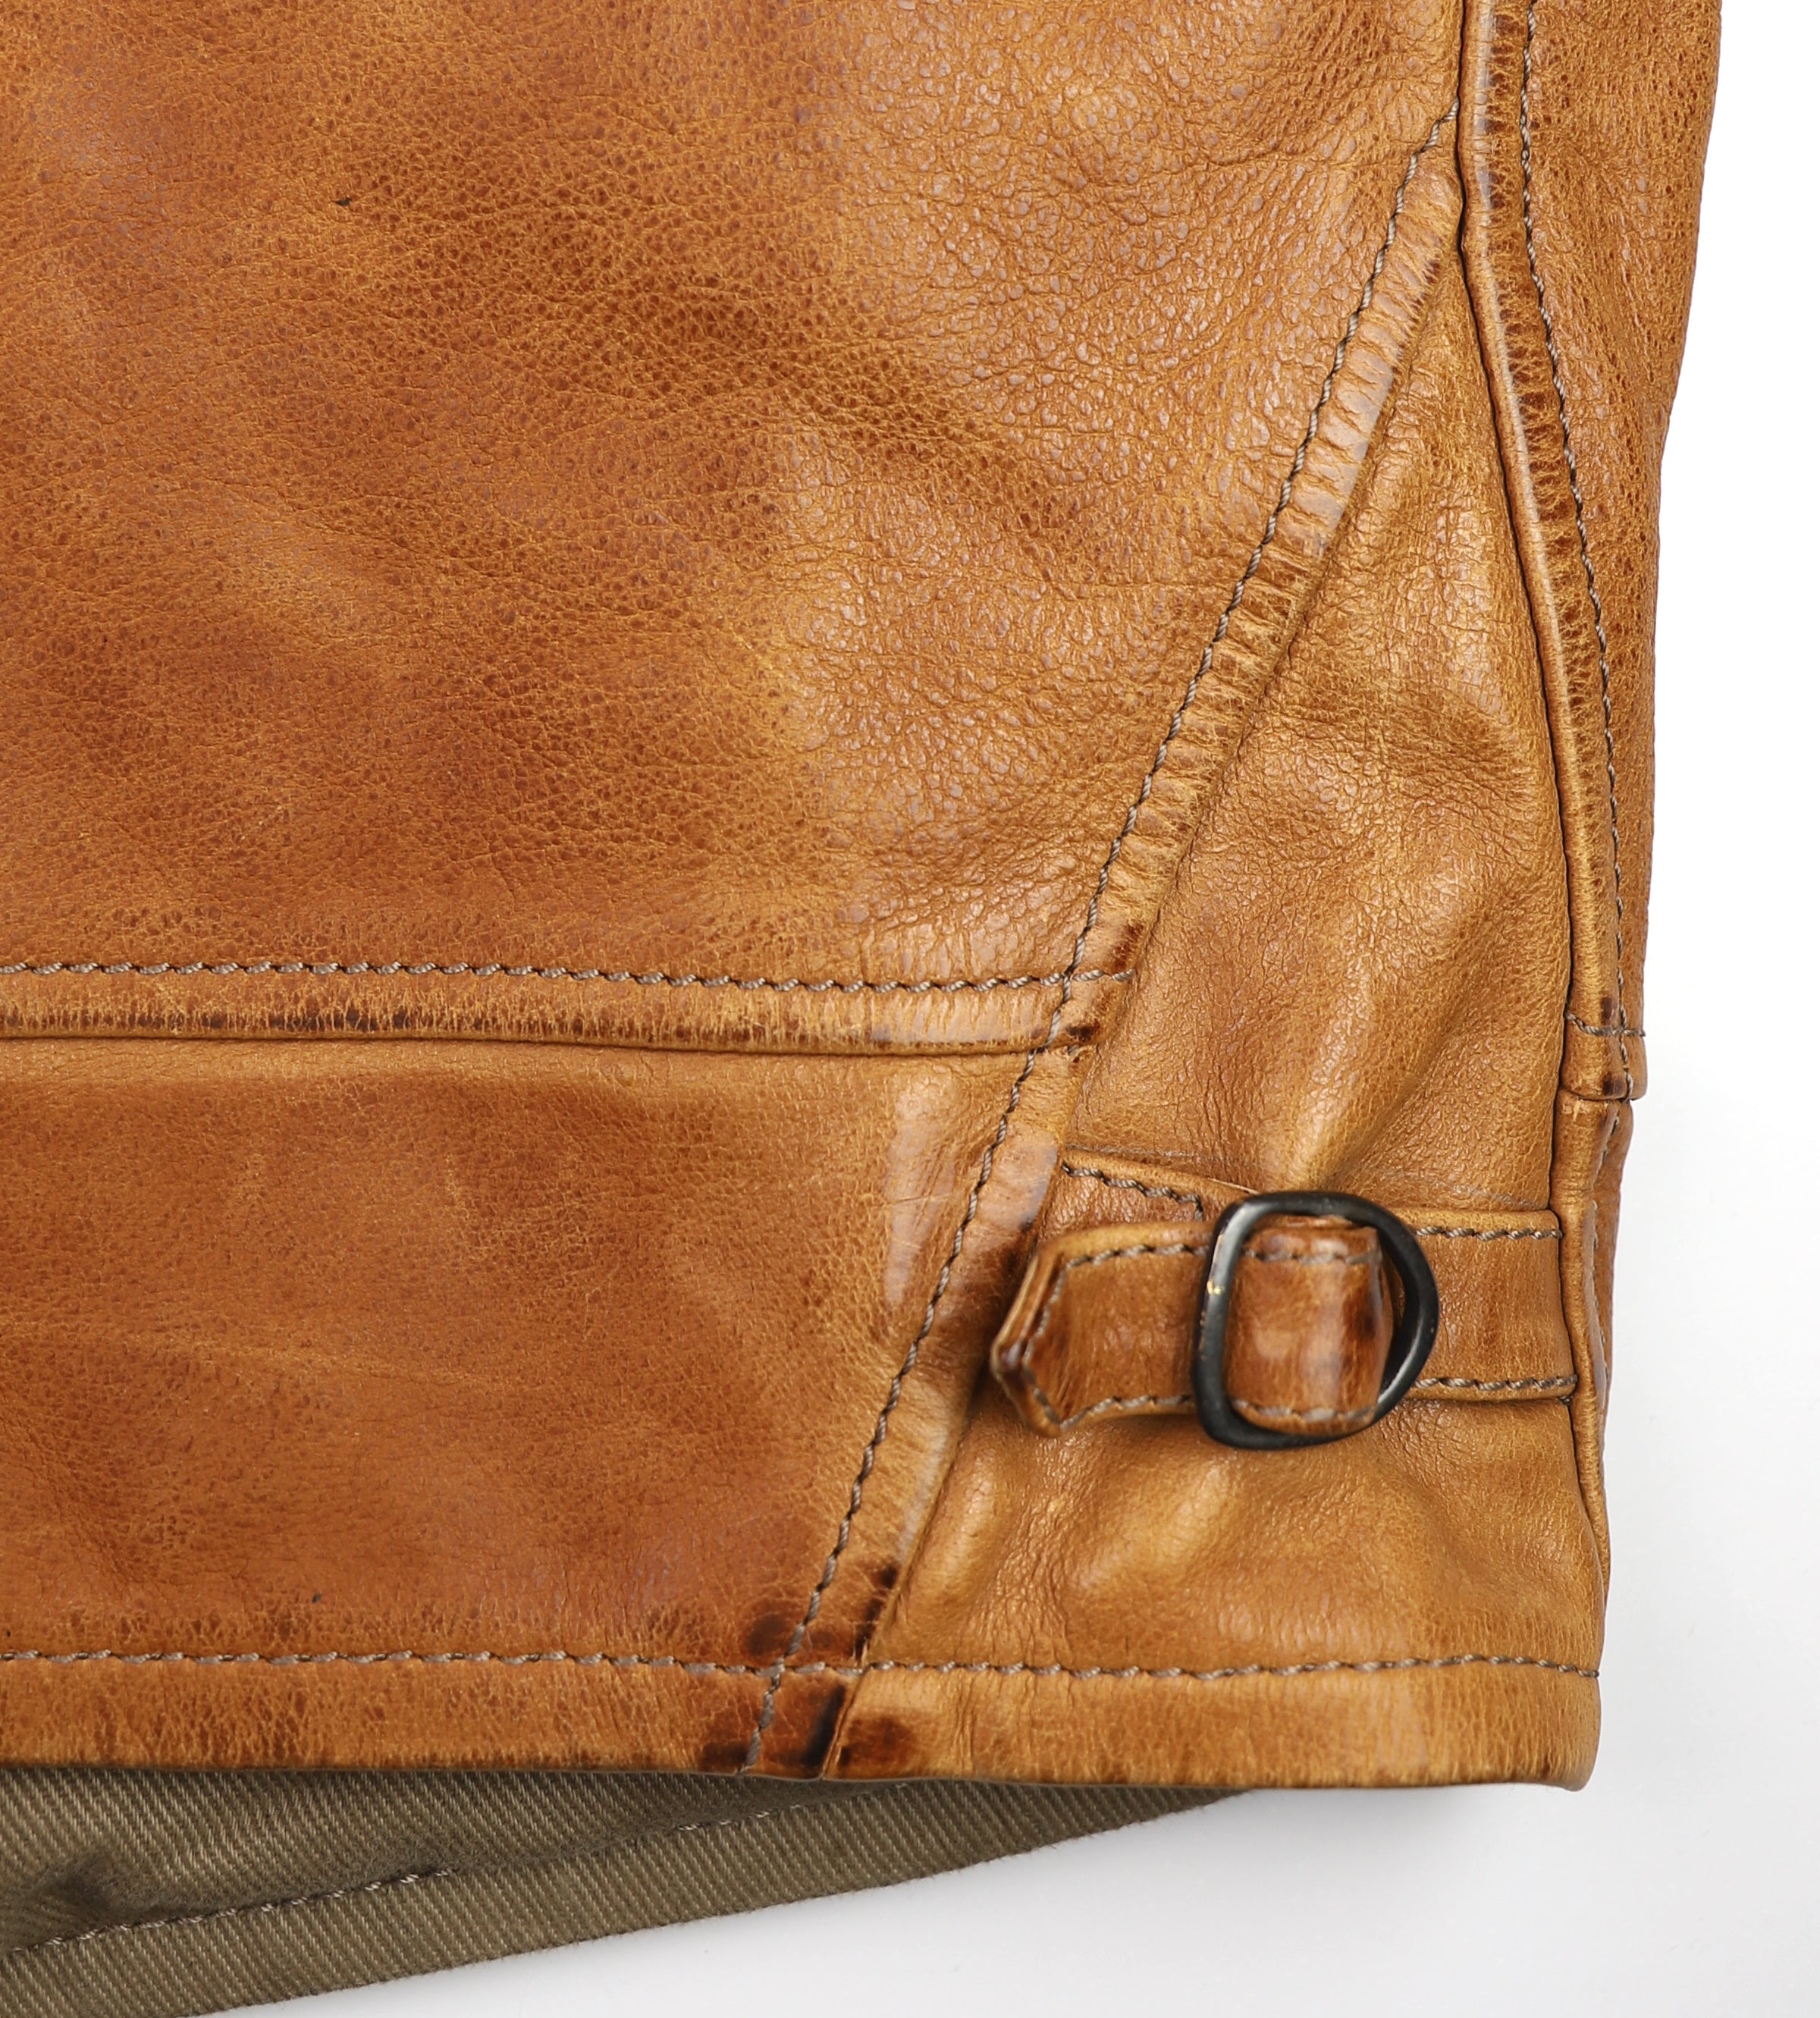 Thedi Markos Zip-Up Shawl Collar Jacket, size 4XL, Cuoio Buffalo